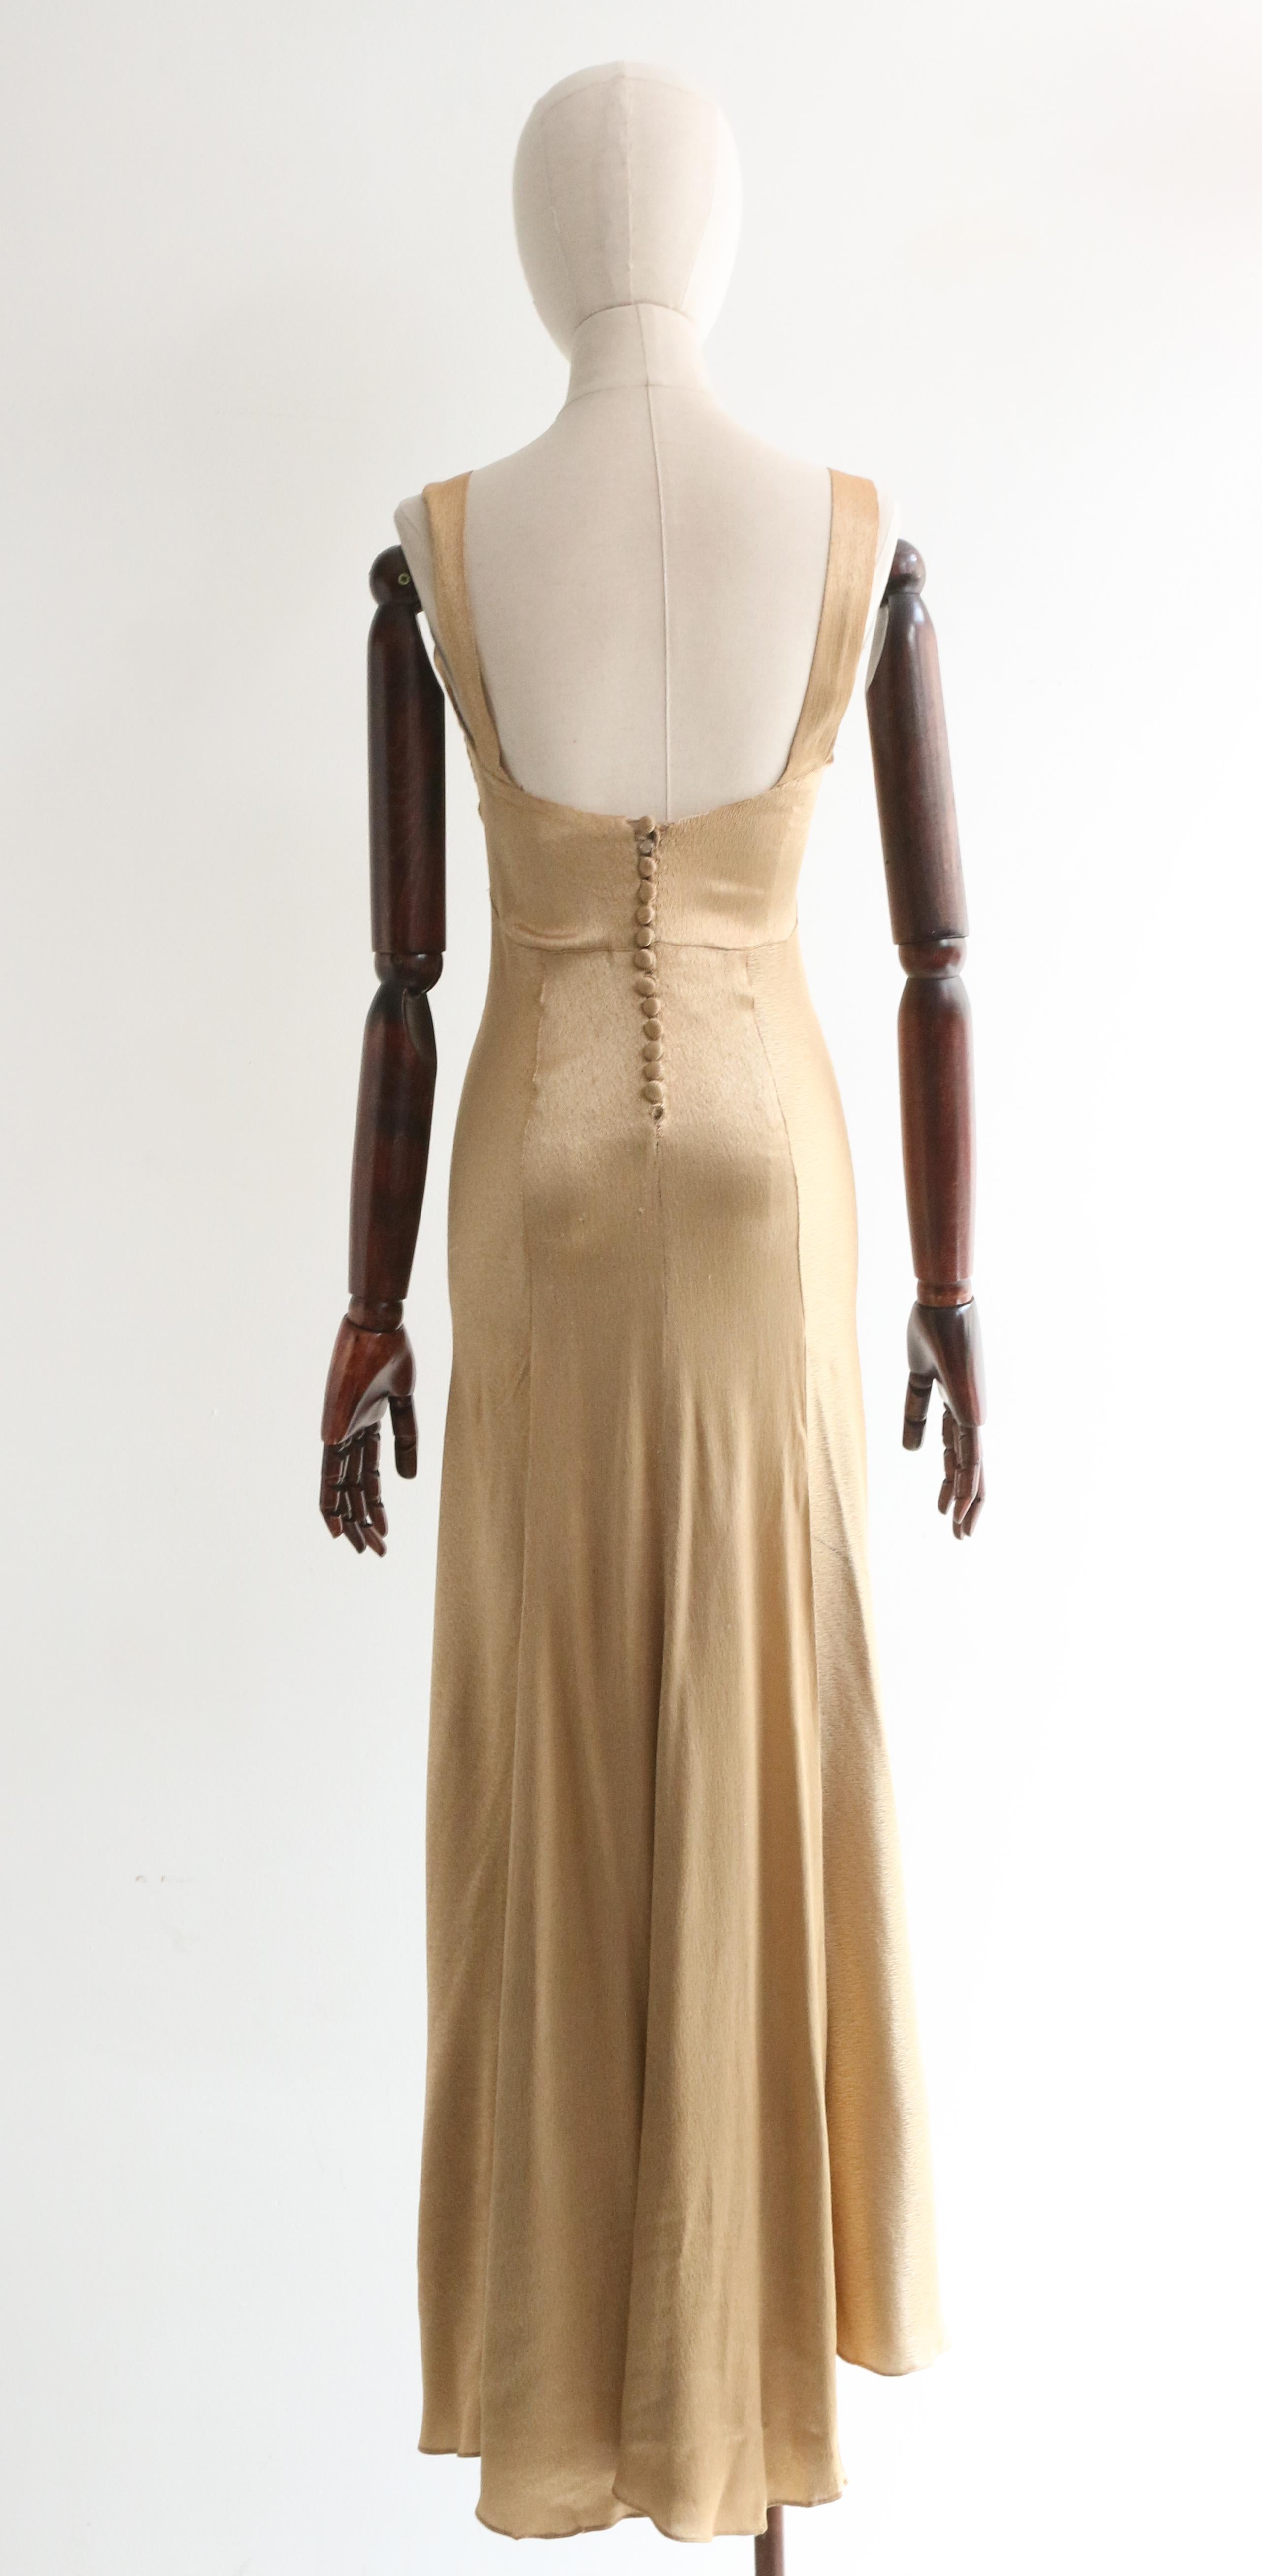 Women's Vintage 1930's Gold Satin Dress & Jacket UK 6-8 US 2-4